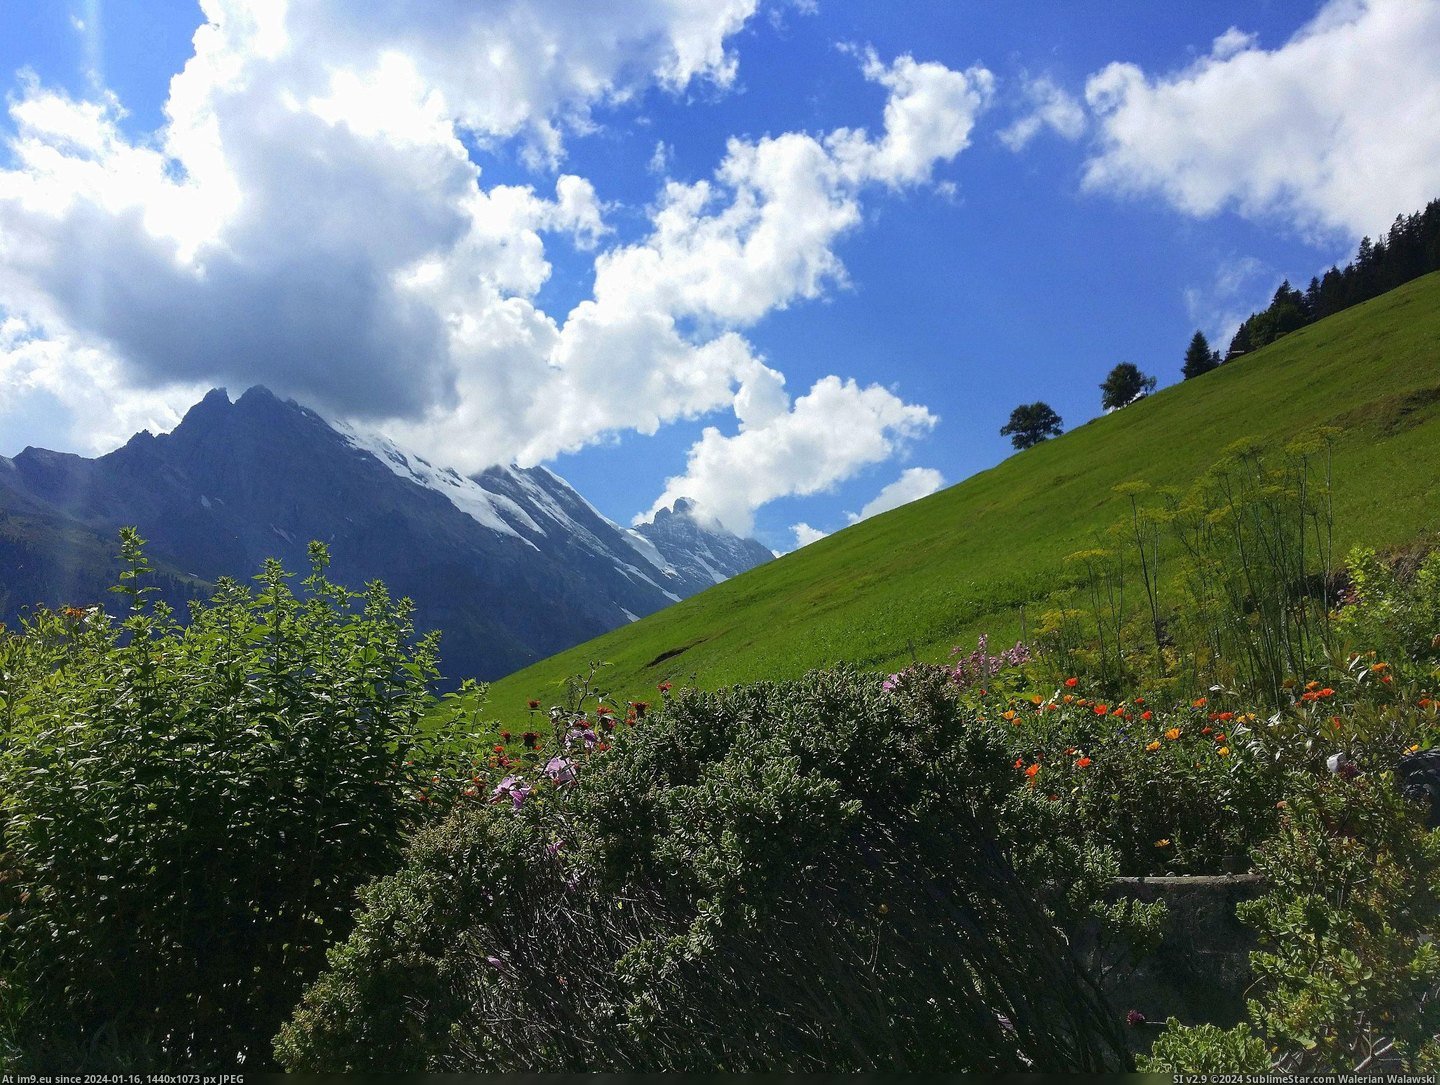 #Mountain #Switzerland #Gimmelwald #Hillside #Grassy [Earthporn] The grassy mountain hillside of Gimmelwald, Switzerland [OC] [2476 x 1857] Pic. (Obraz z album My r/EARTHPORN favs))